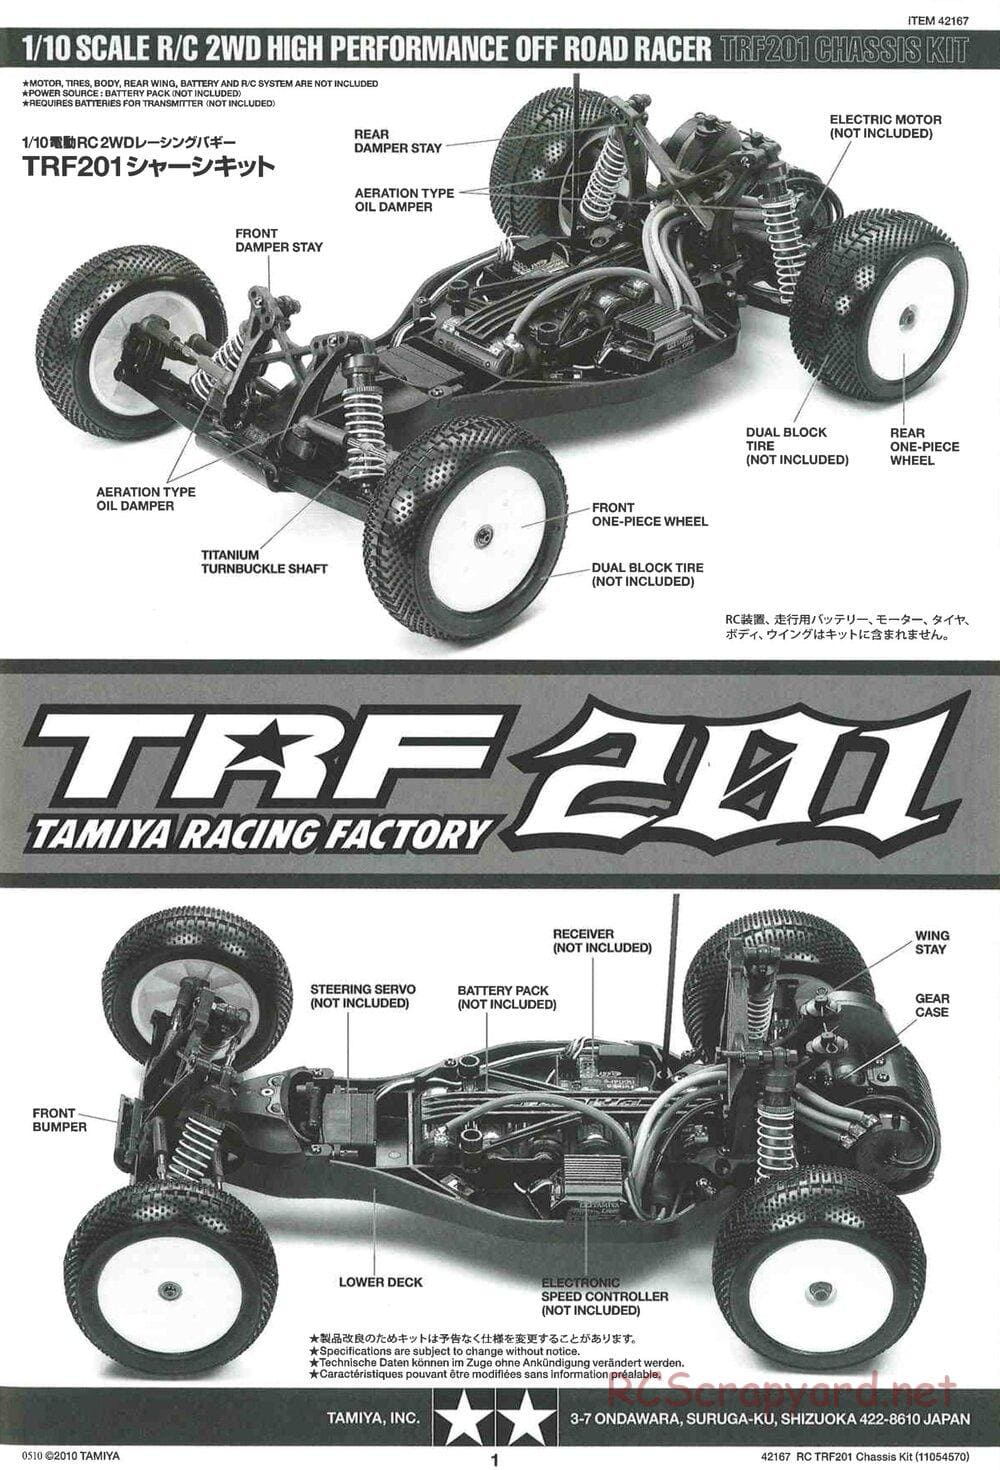 Tamiya - TRF201 Chassis - Manual - Page 1